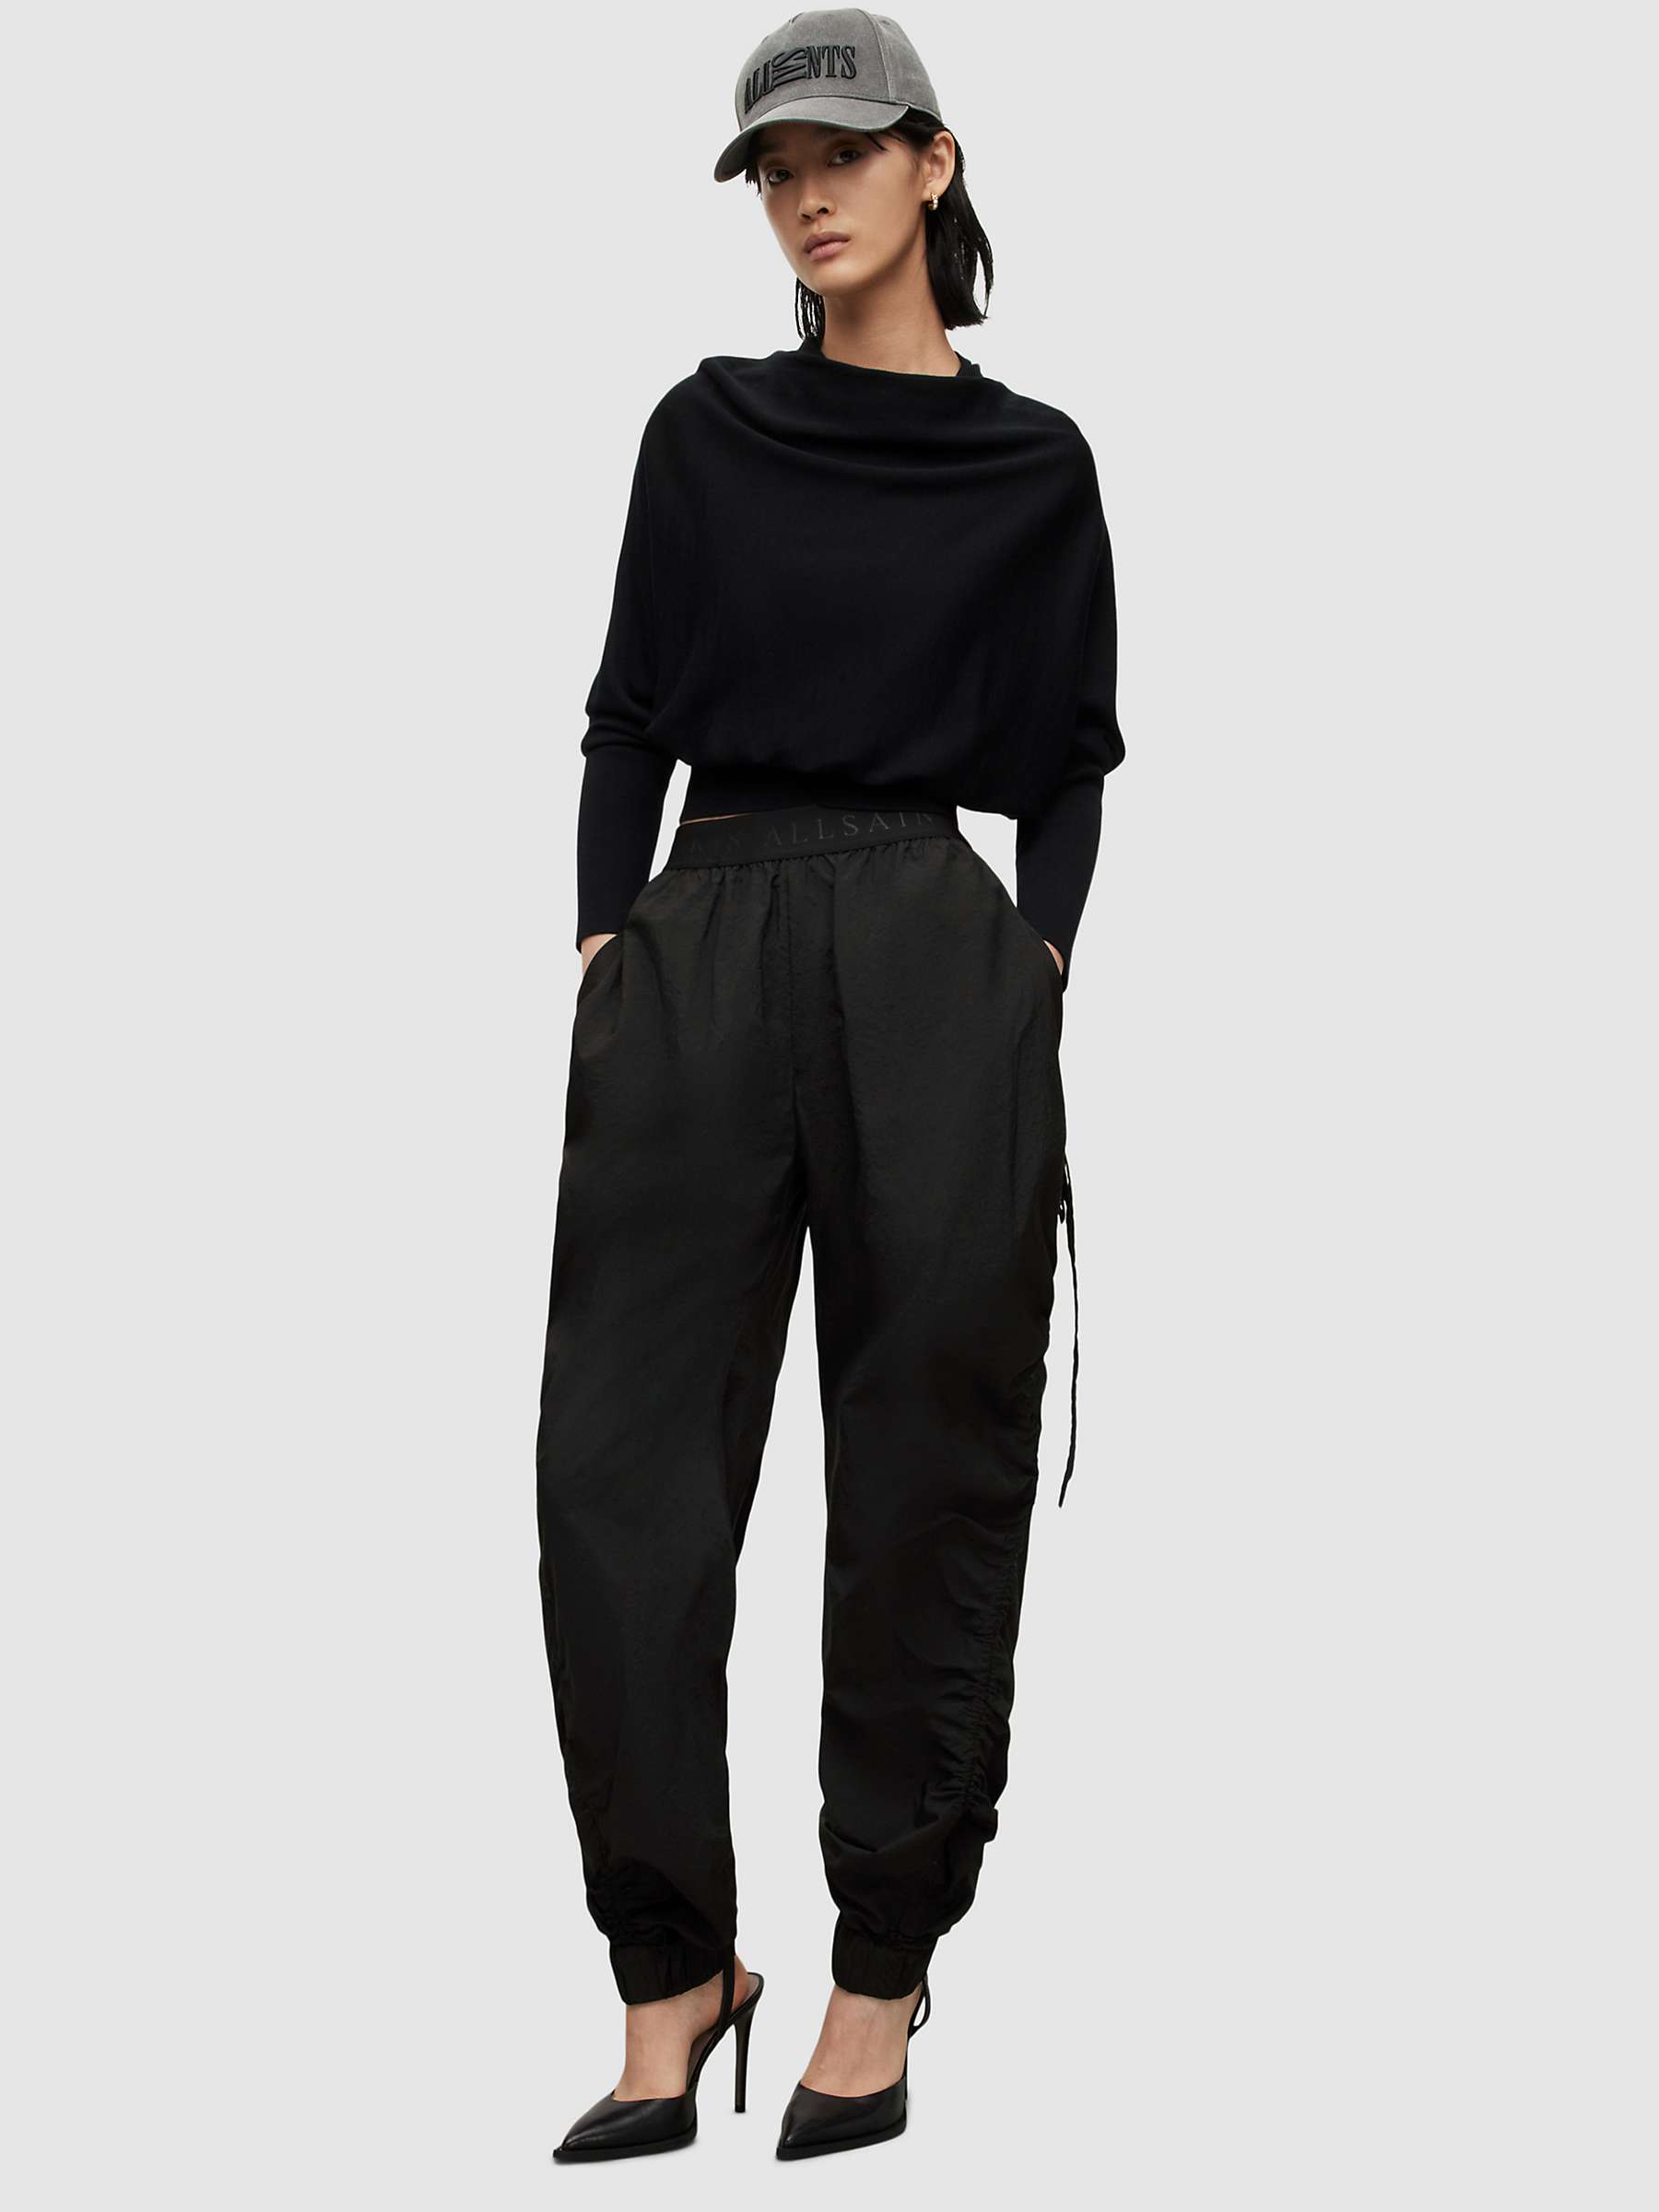 AllSaints Aura Oversized Fit Trousers, Black at John Lewis & Partners